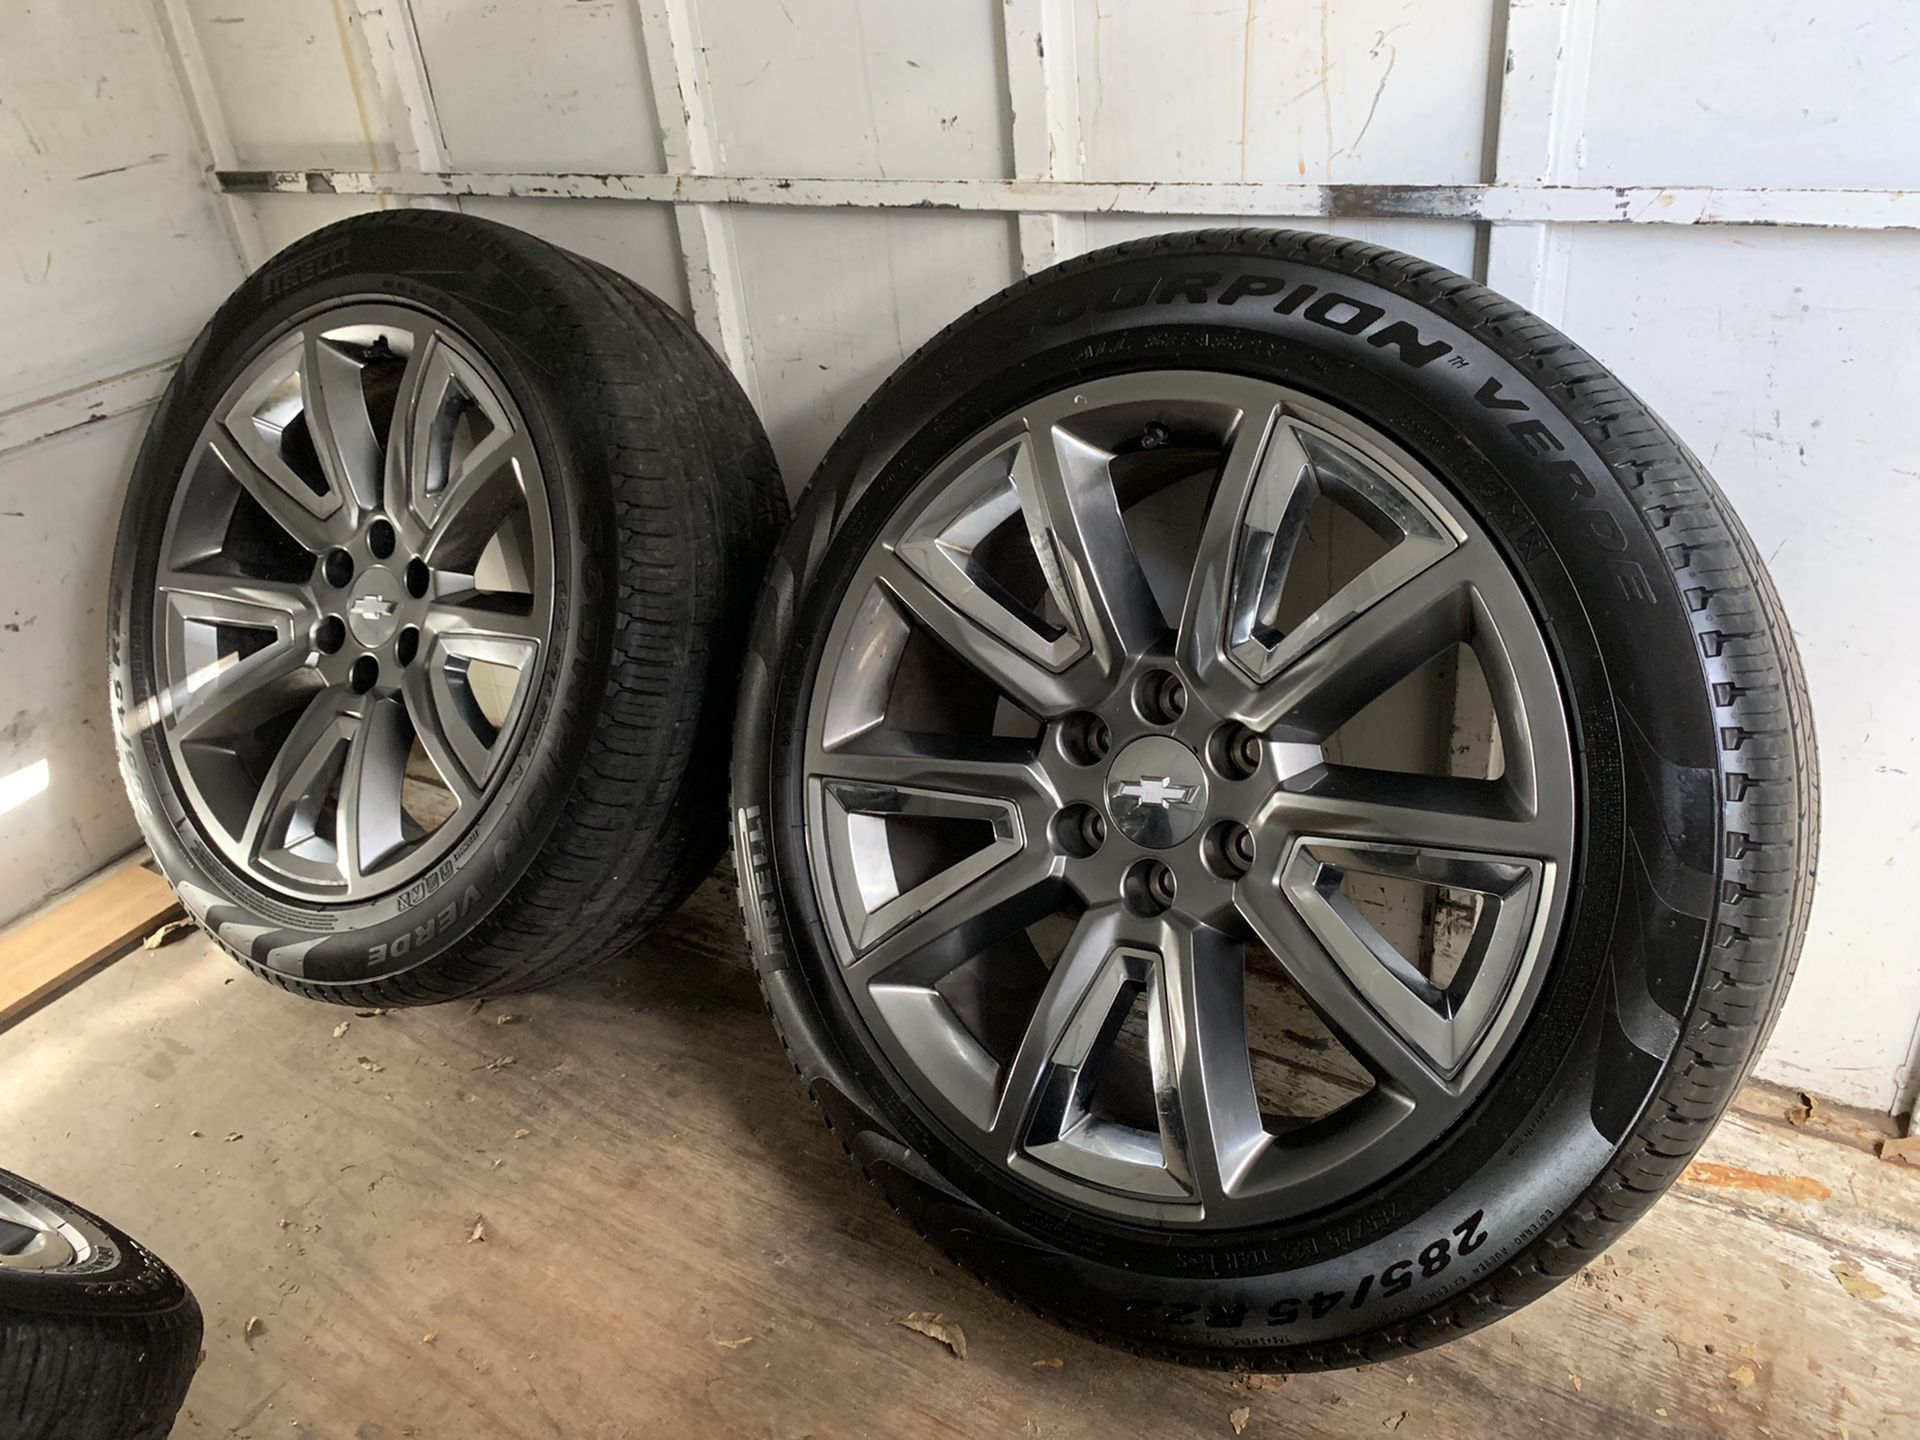 2018 Chevrolet Tahoe LTZ 22” OEM Wheels w/ Pirelli Scorpion Tires